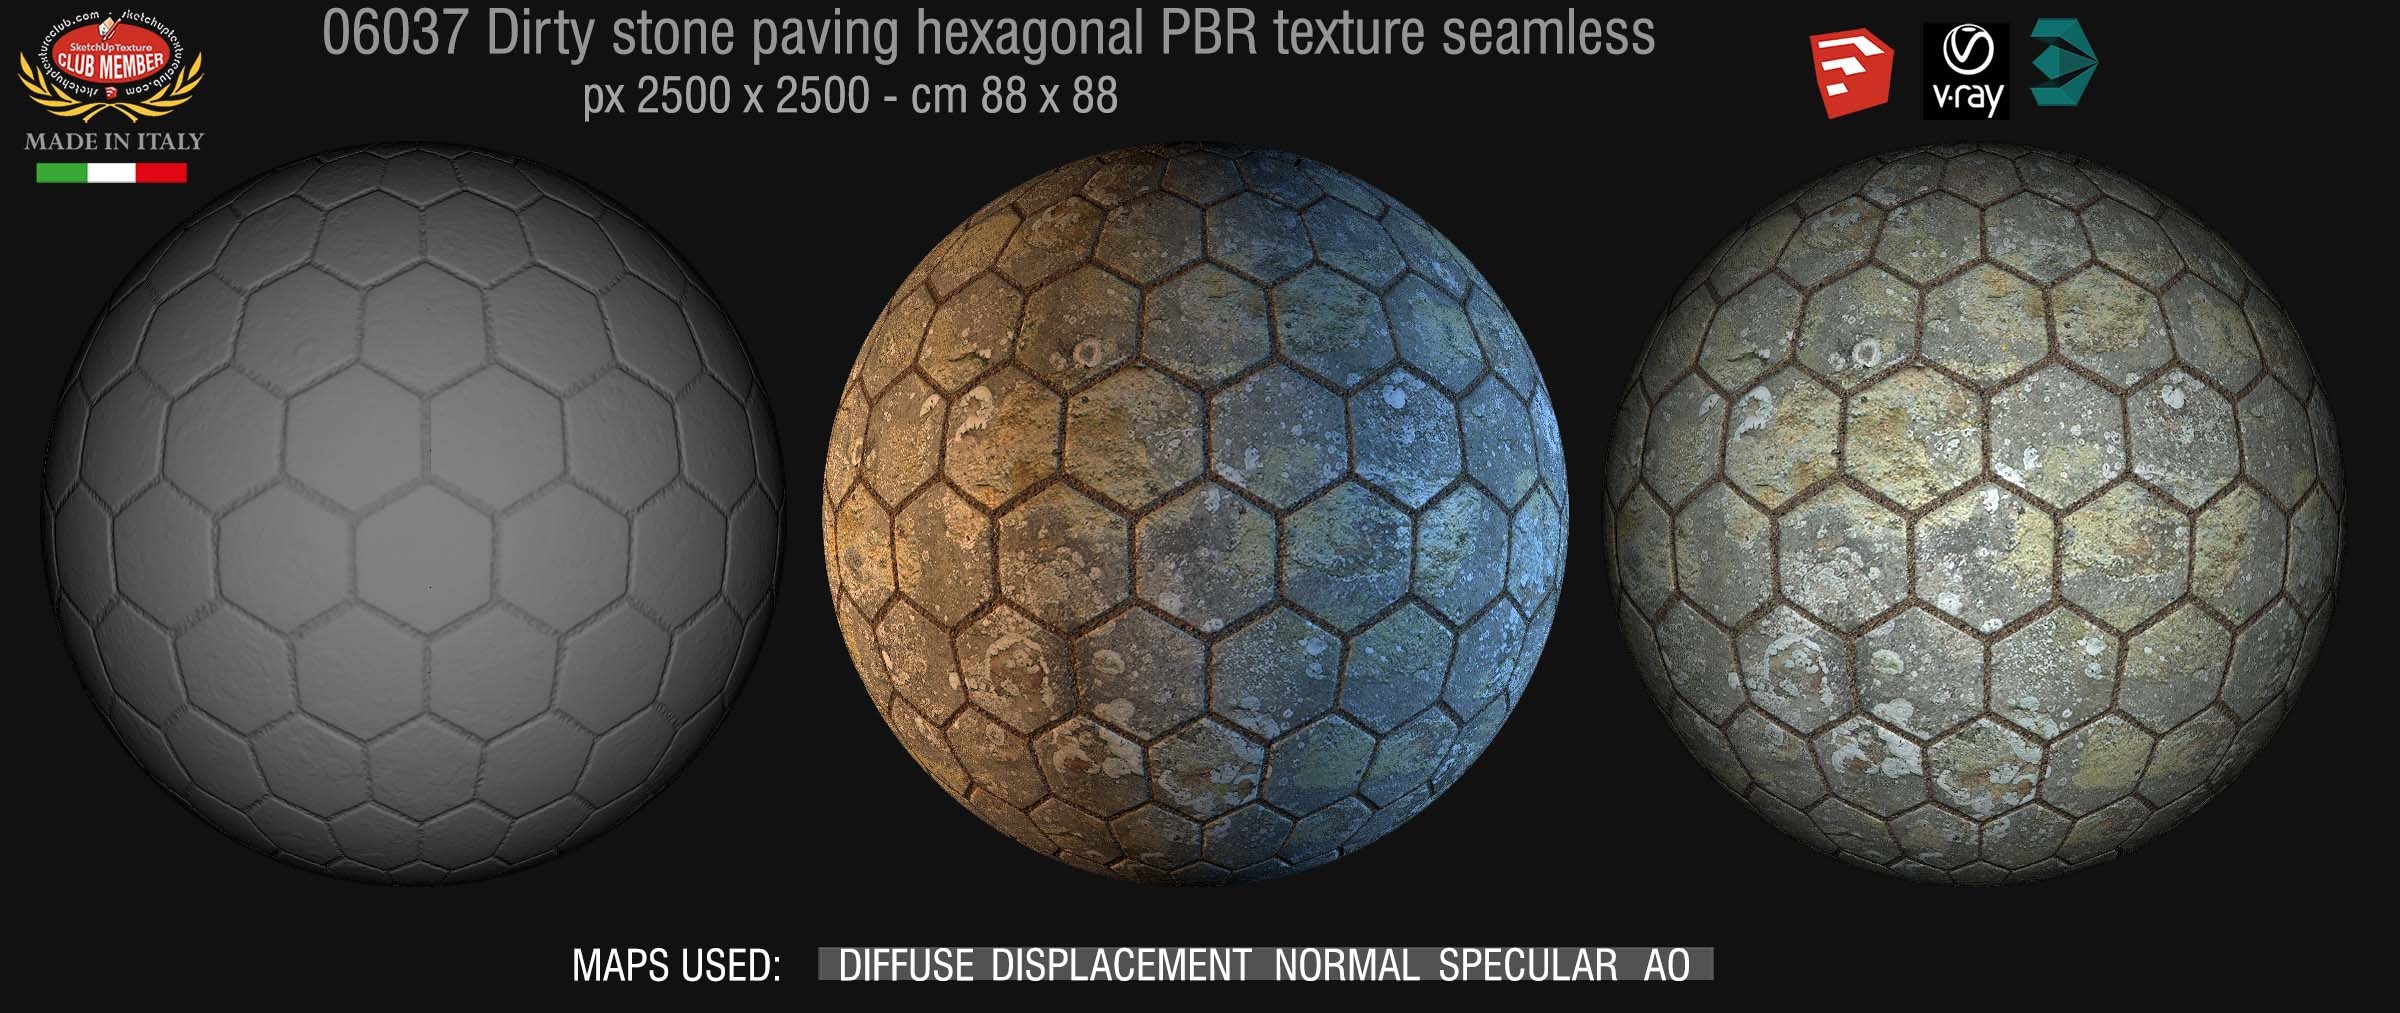 06037 Dirty stone paving hexagonal PBR texture seamless demo